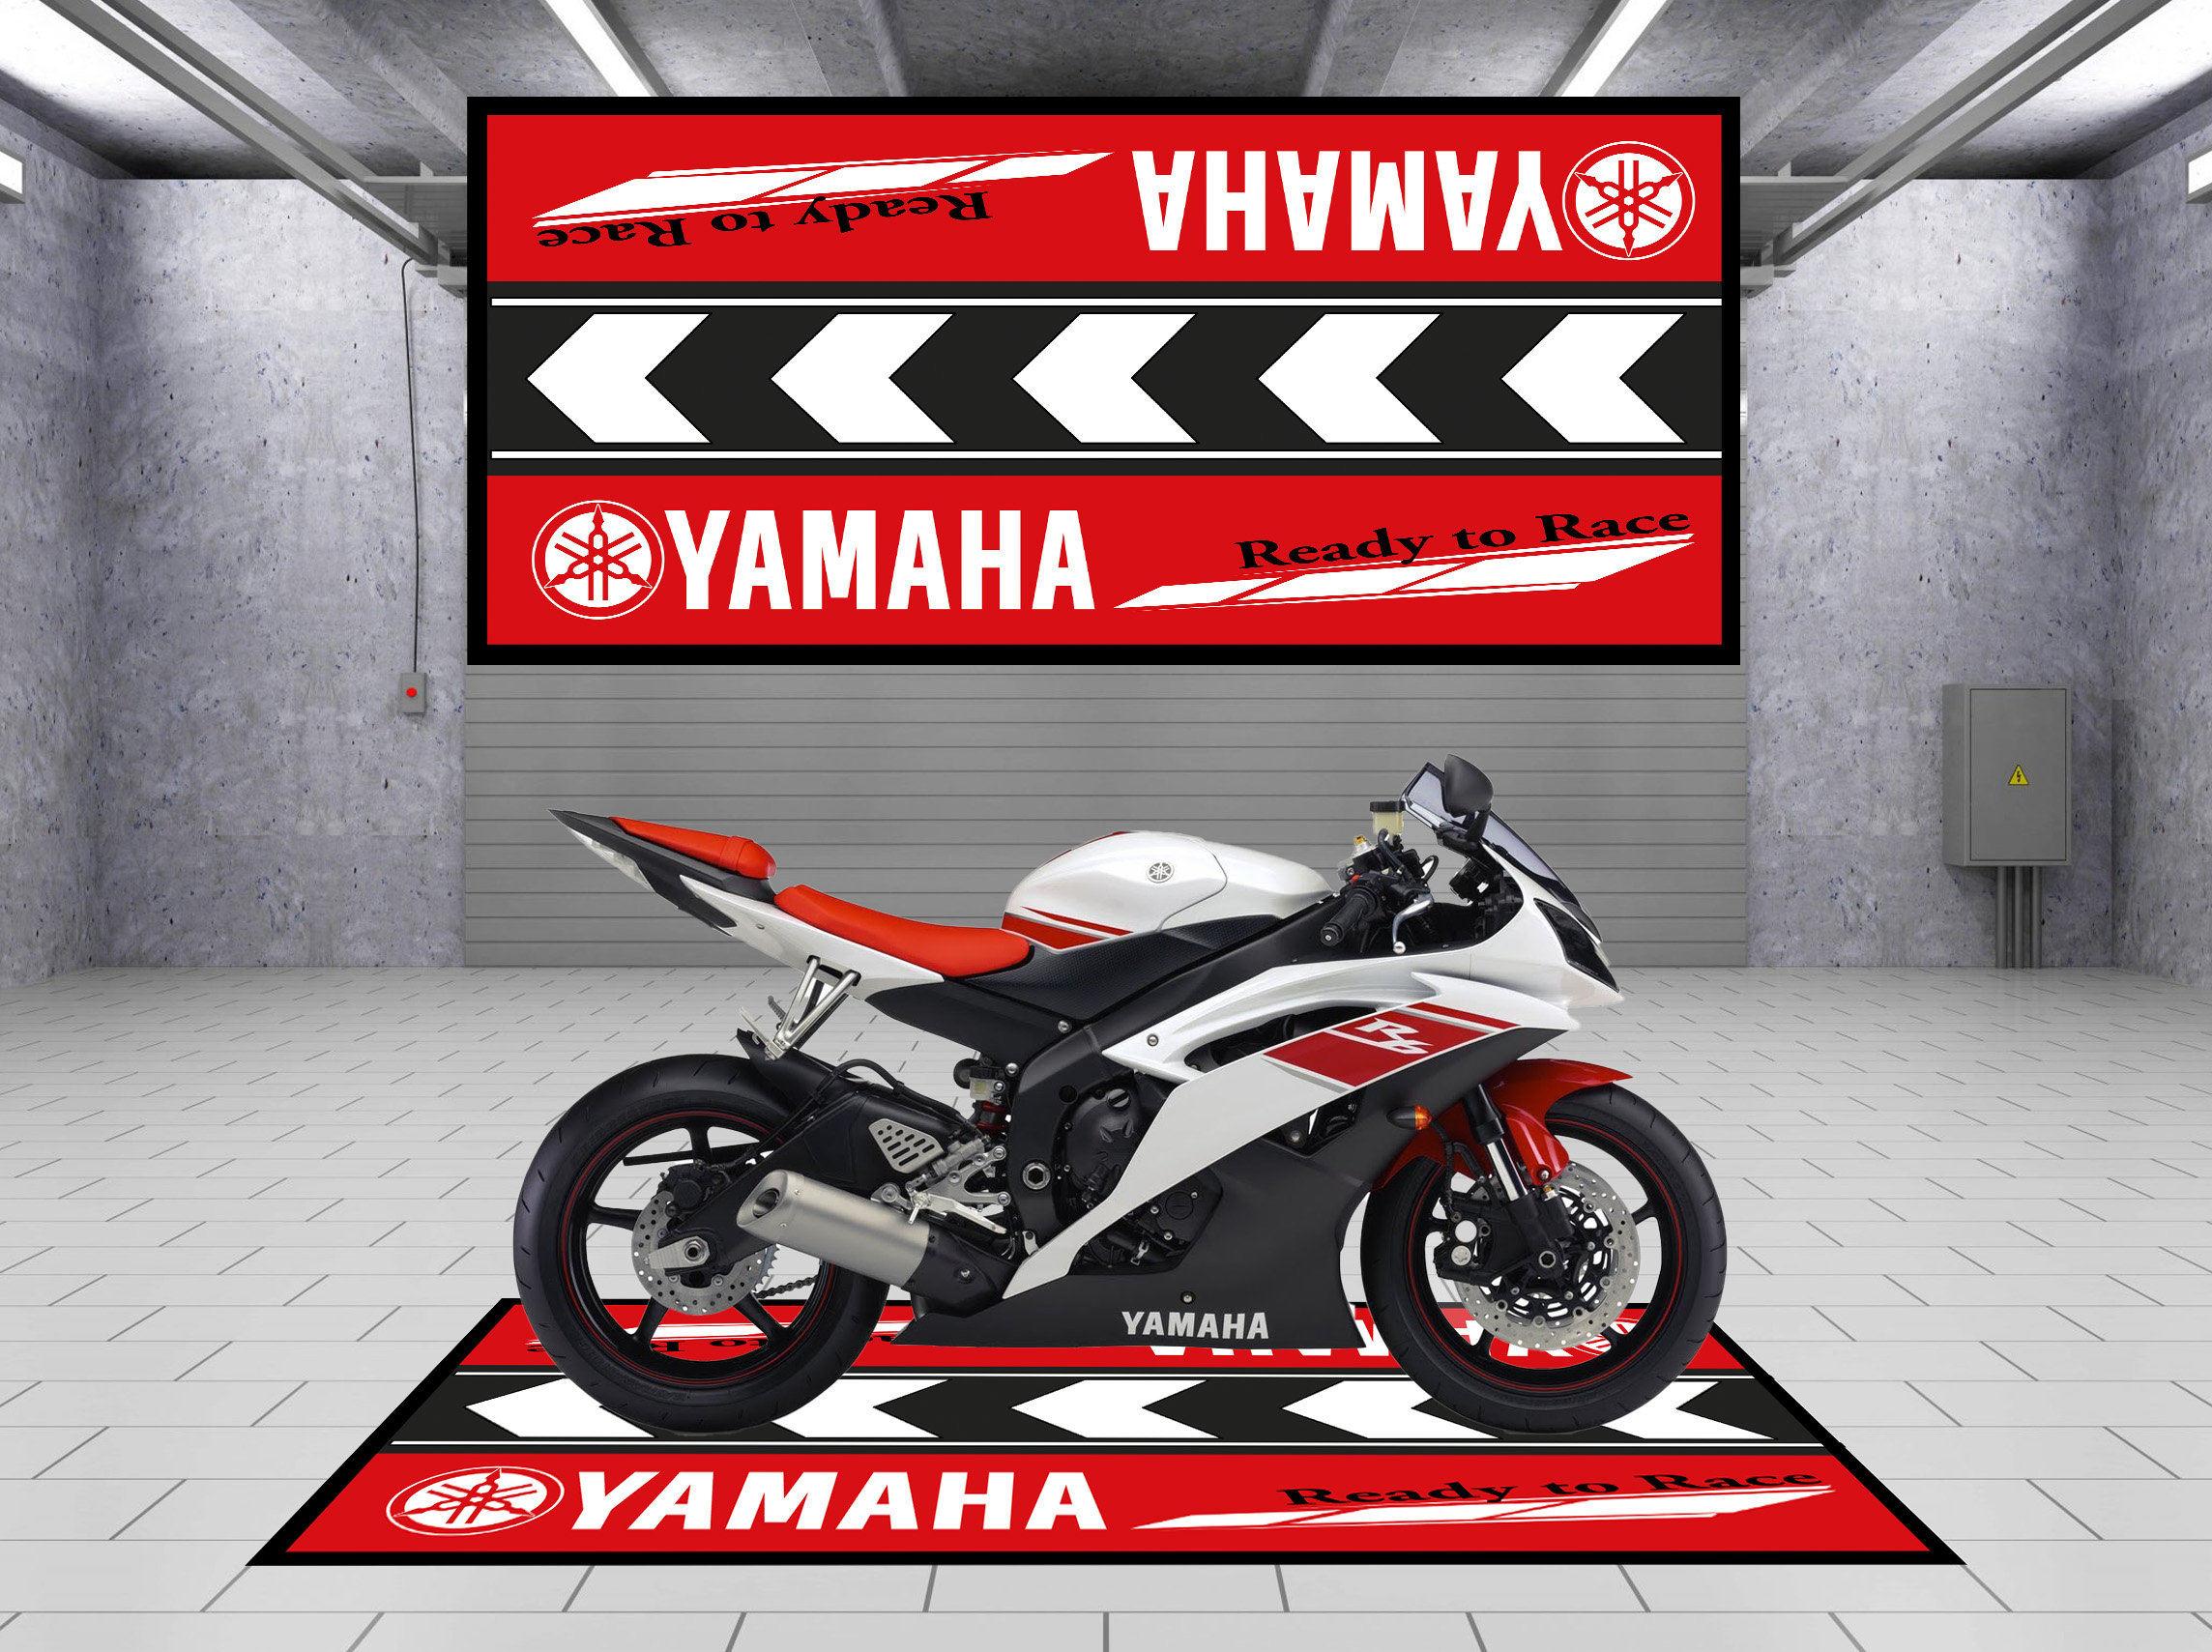 Yamaha motorrad - .de